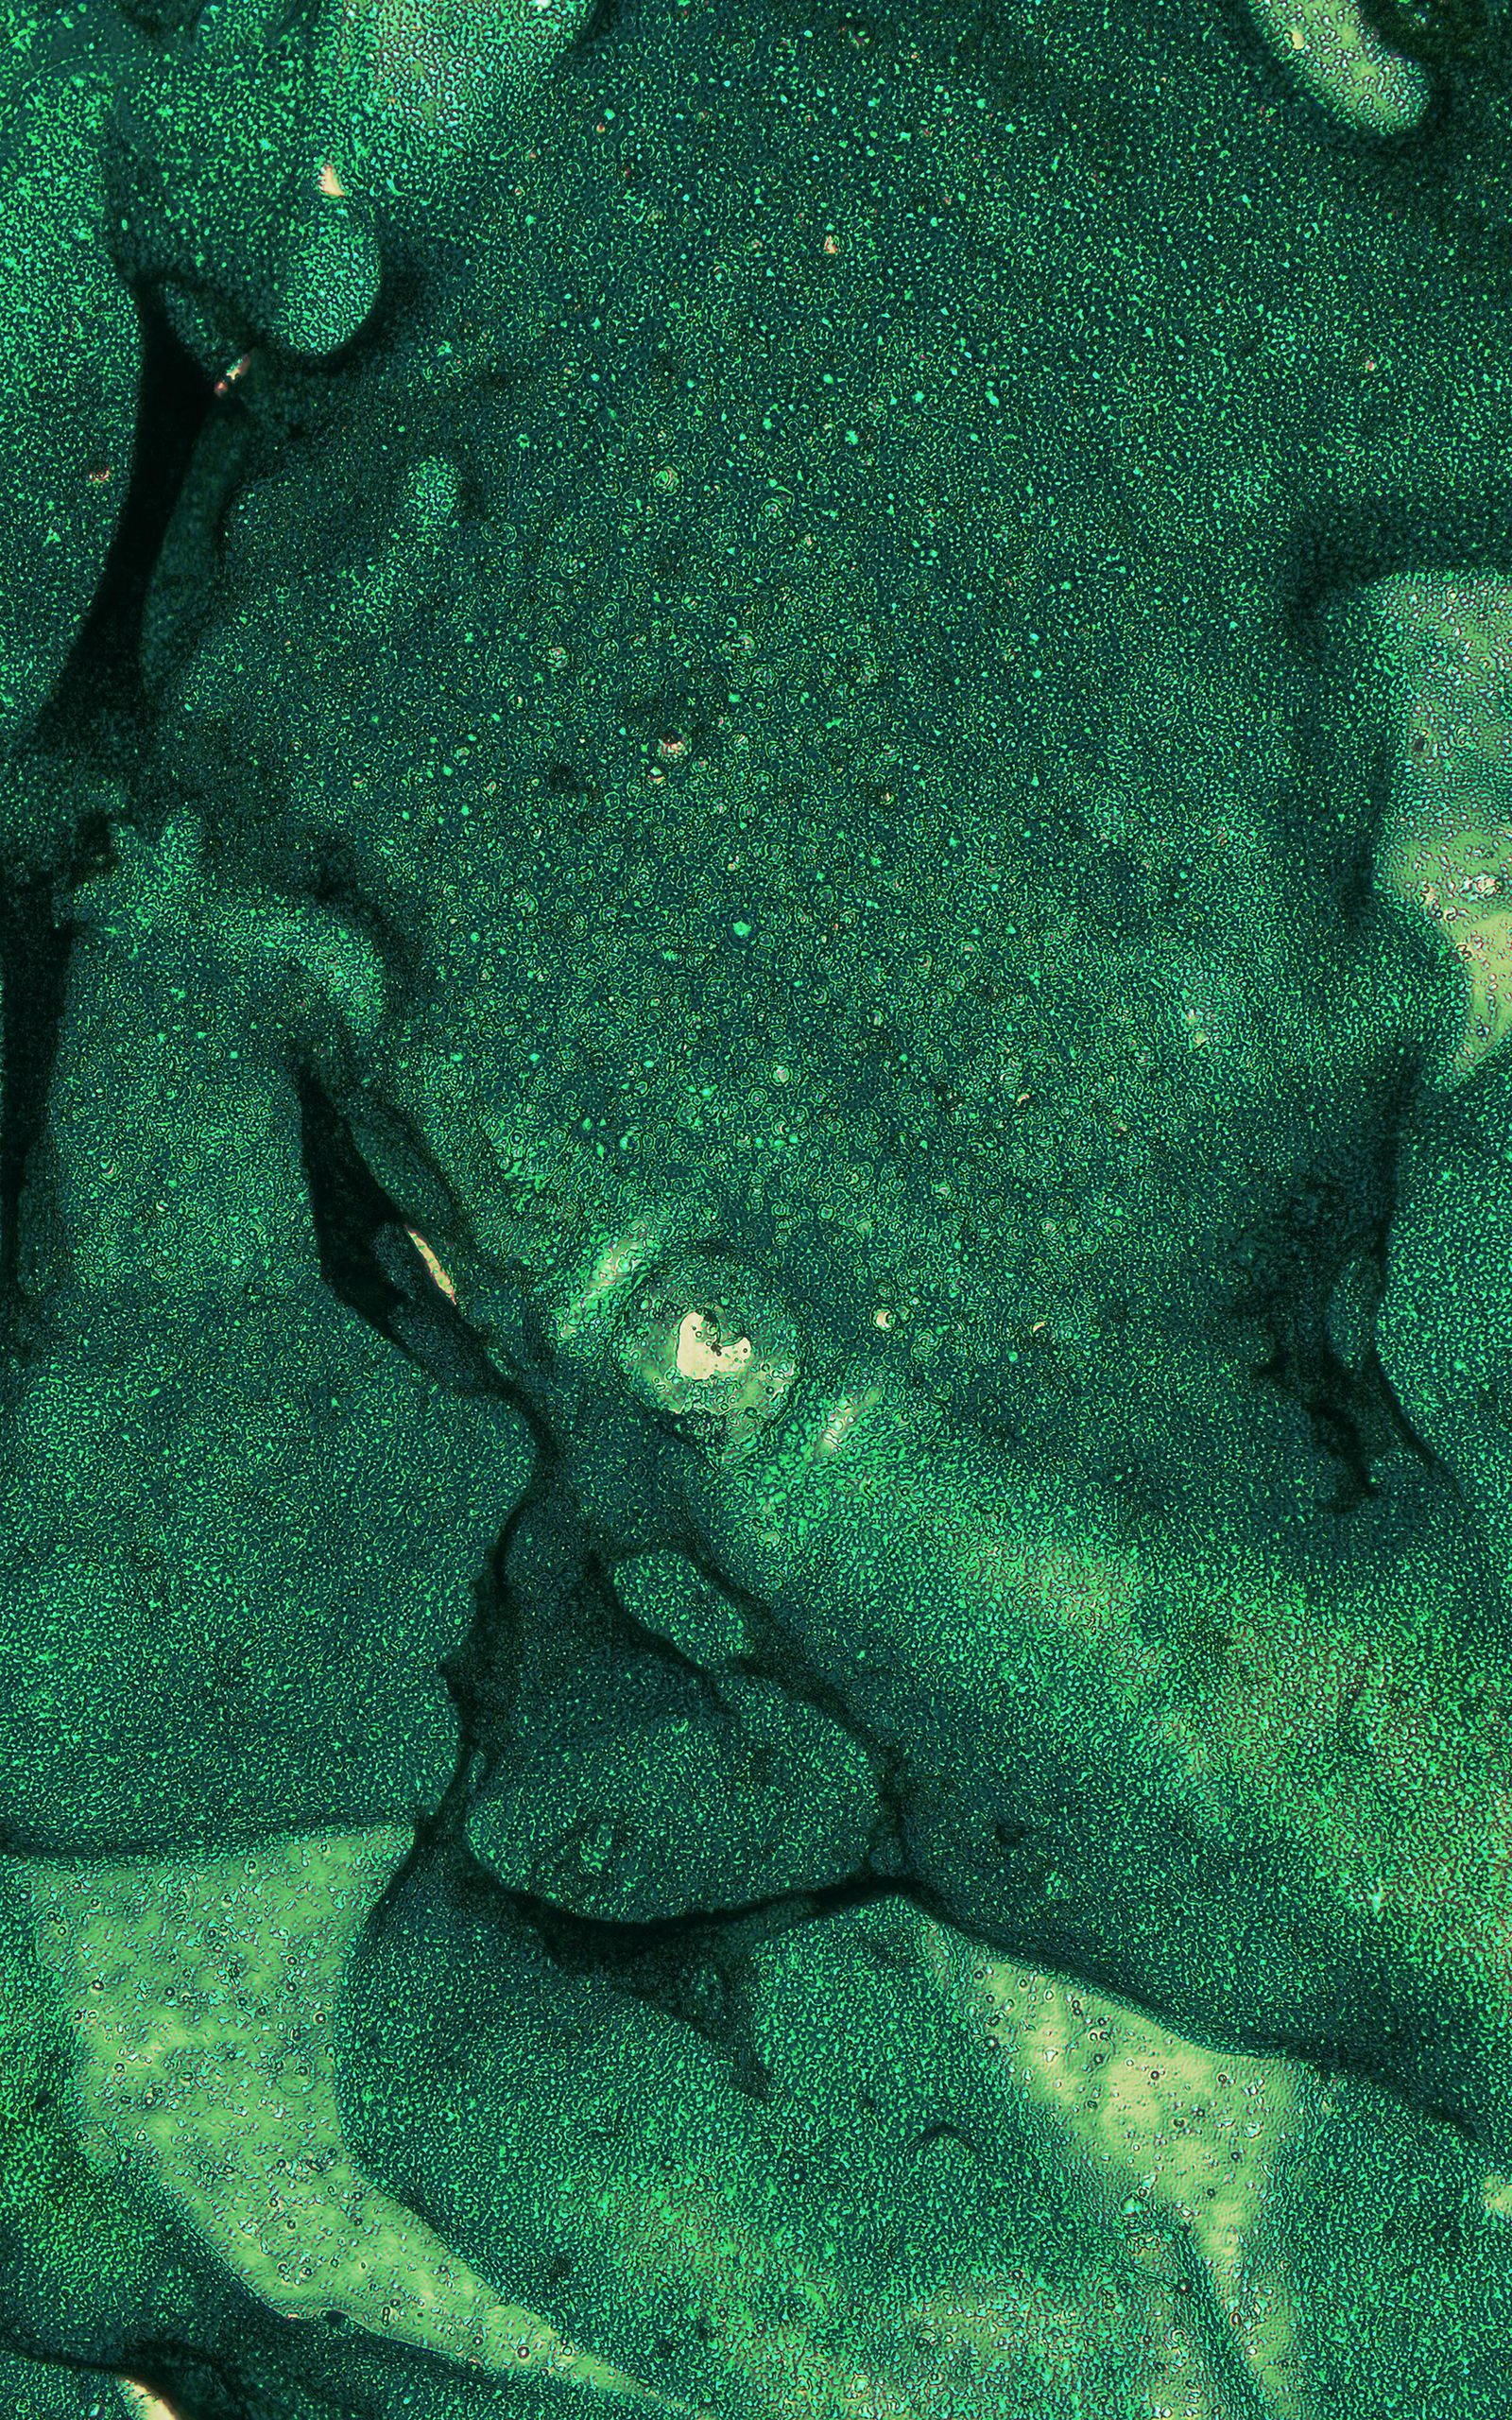 © Grzegorz Wełnicki - Microscopic image of a pancreatic flake printed with bioink.